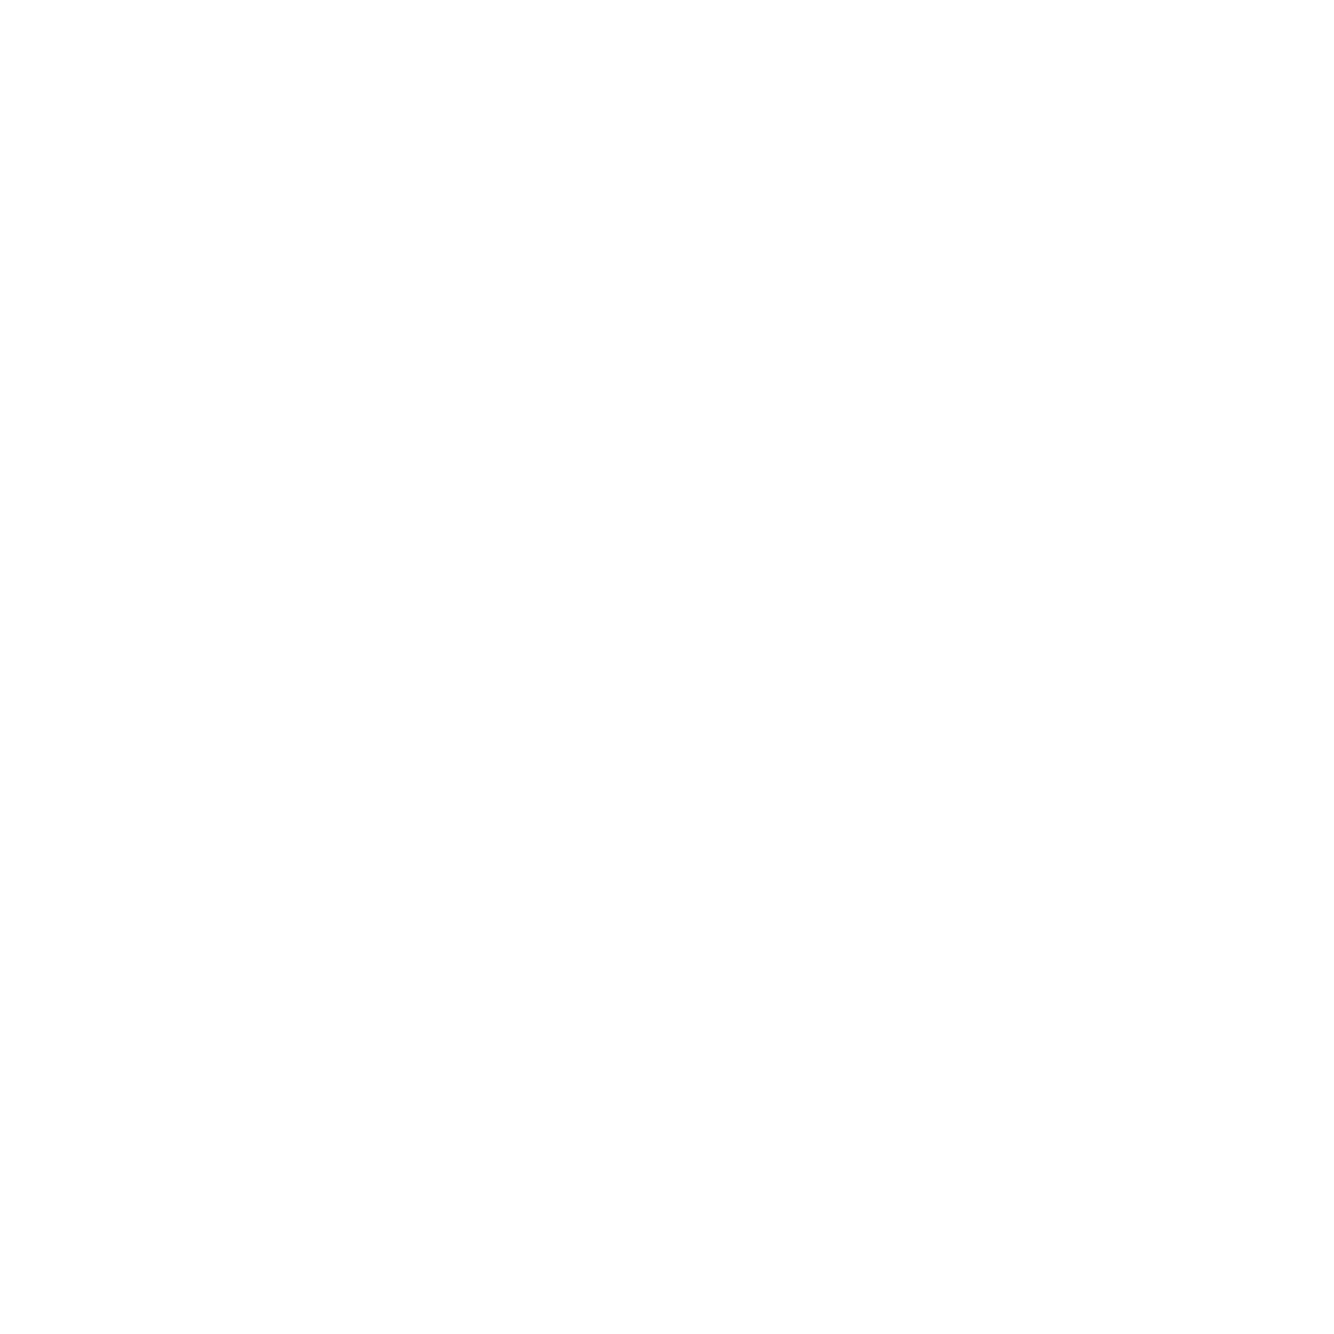 Brick Lane Tap Room